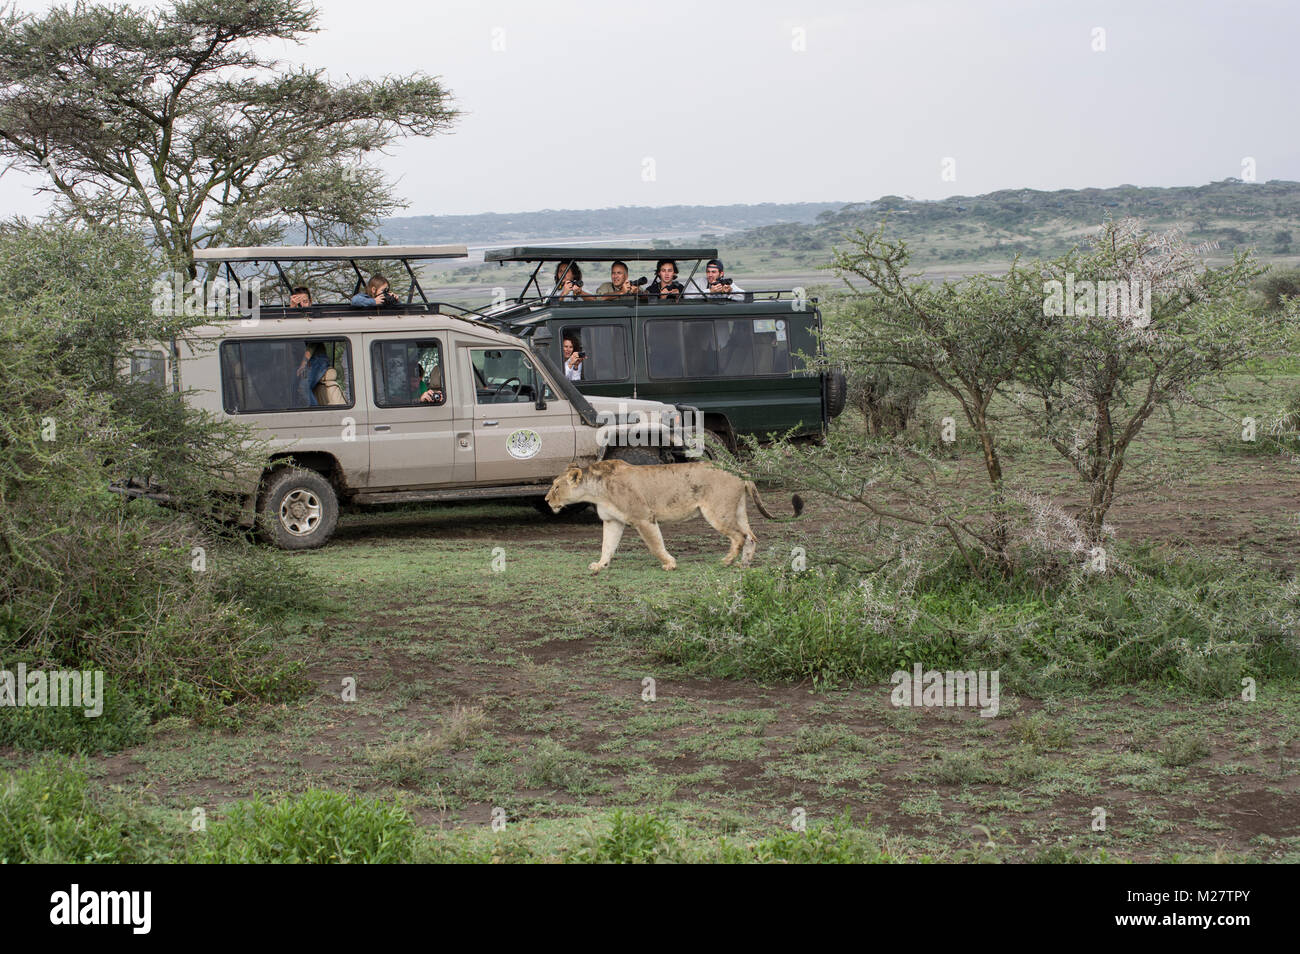 Female lioness in the Serengeti walking near safari SUV vehicles Stock Photo